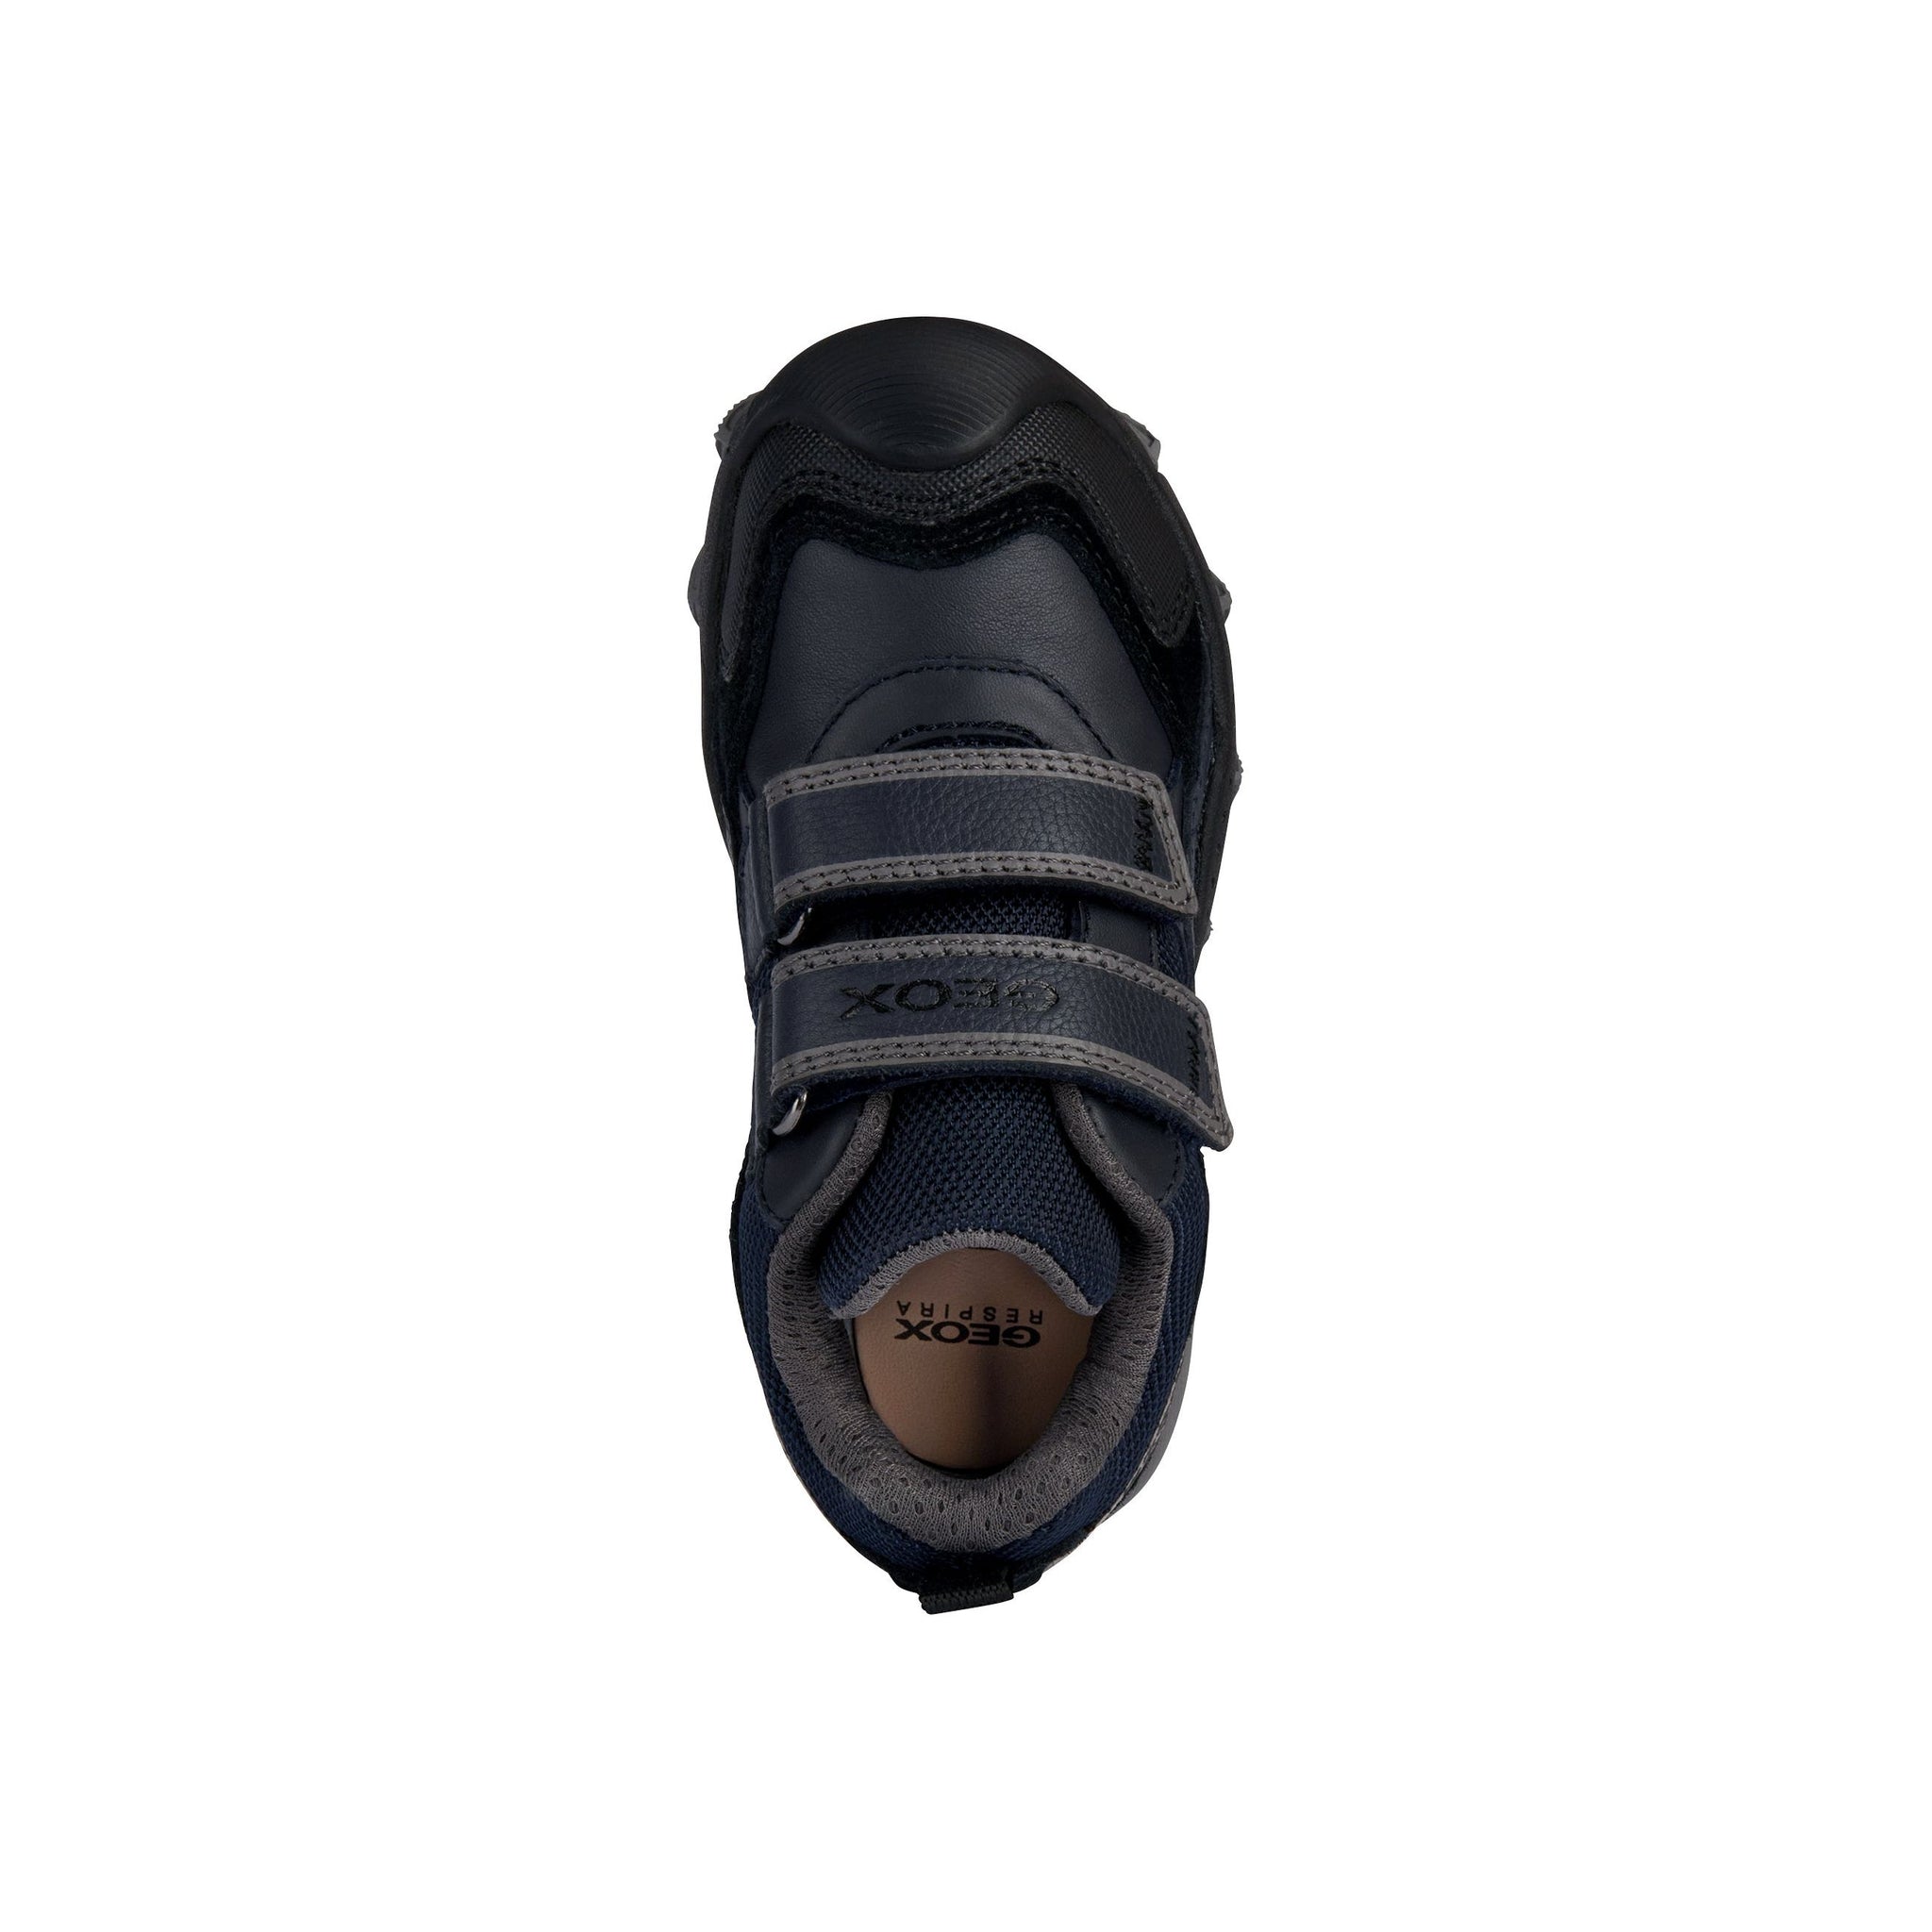 Geox Buller(J159VA) - Boys Velcro Shoe in Navy |Geox Shoes | Childrens Shoe Fitting | Wisemans | Bantry | West Cork | Ireland